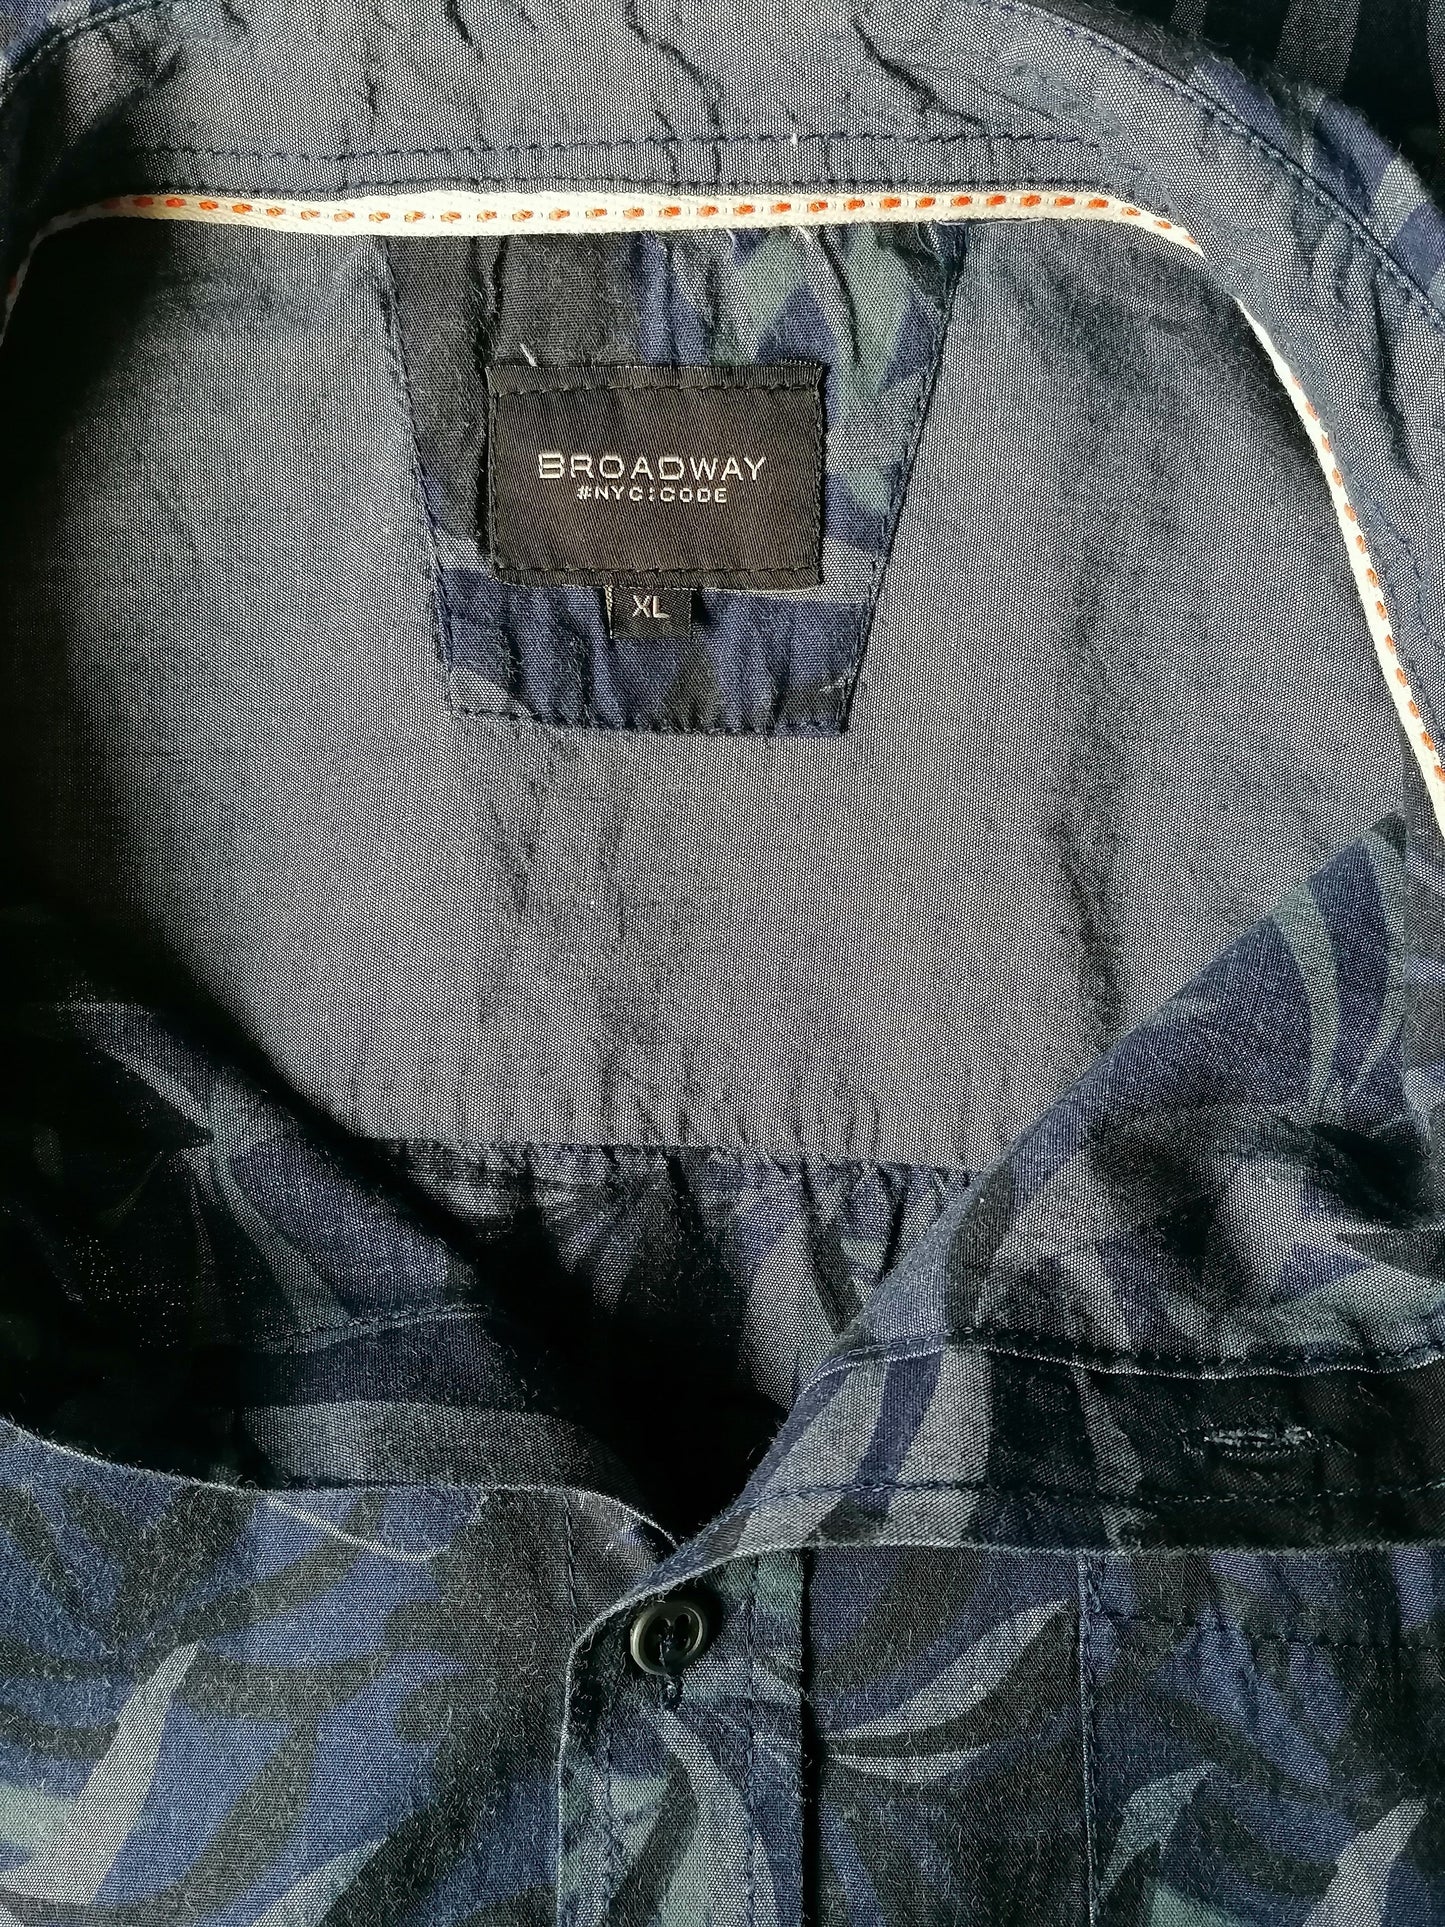 Broadway Shirt short sleeve. Blue black flowers print. Size XL.